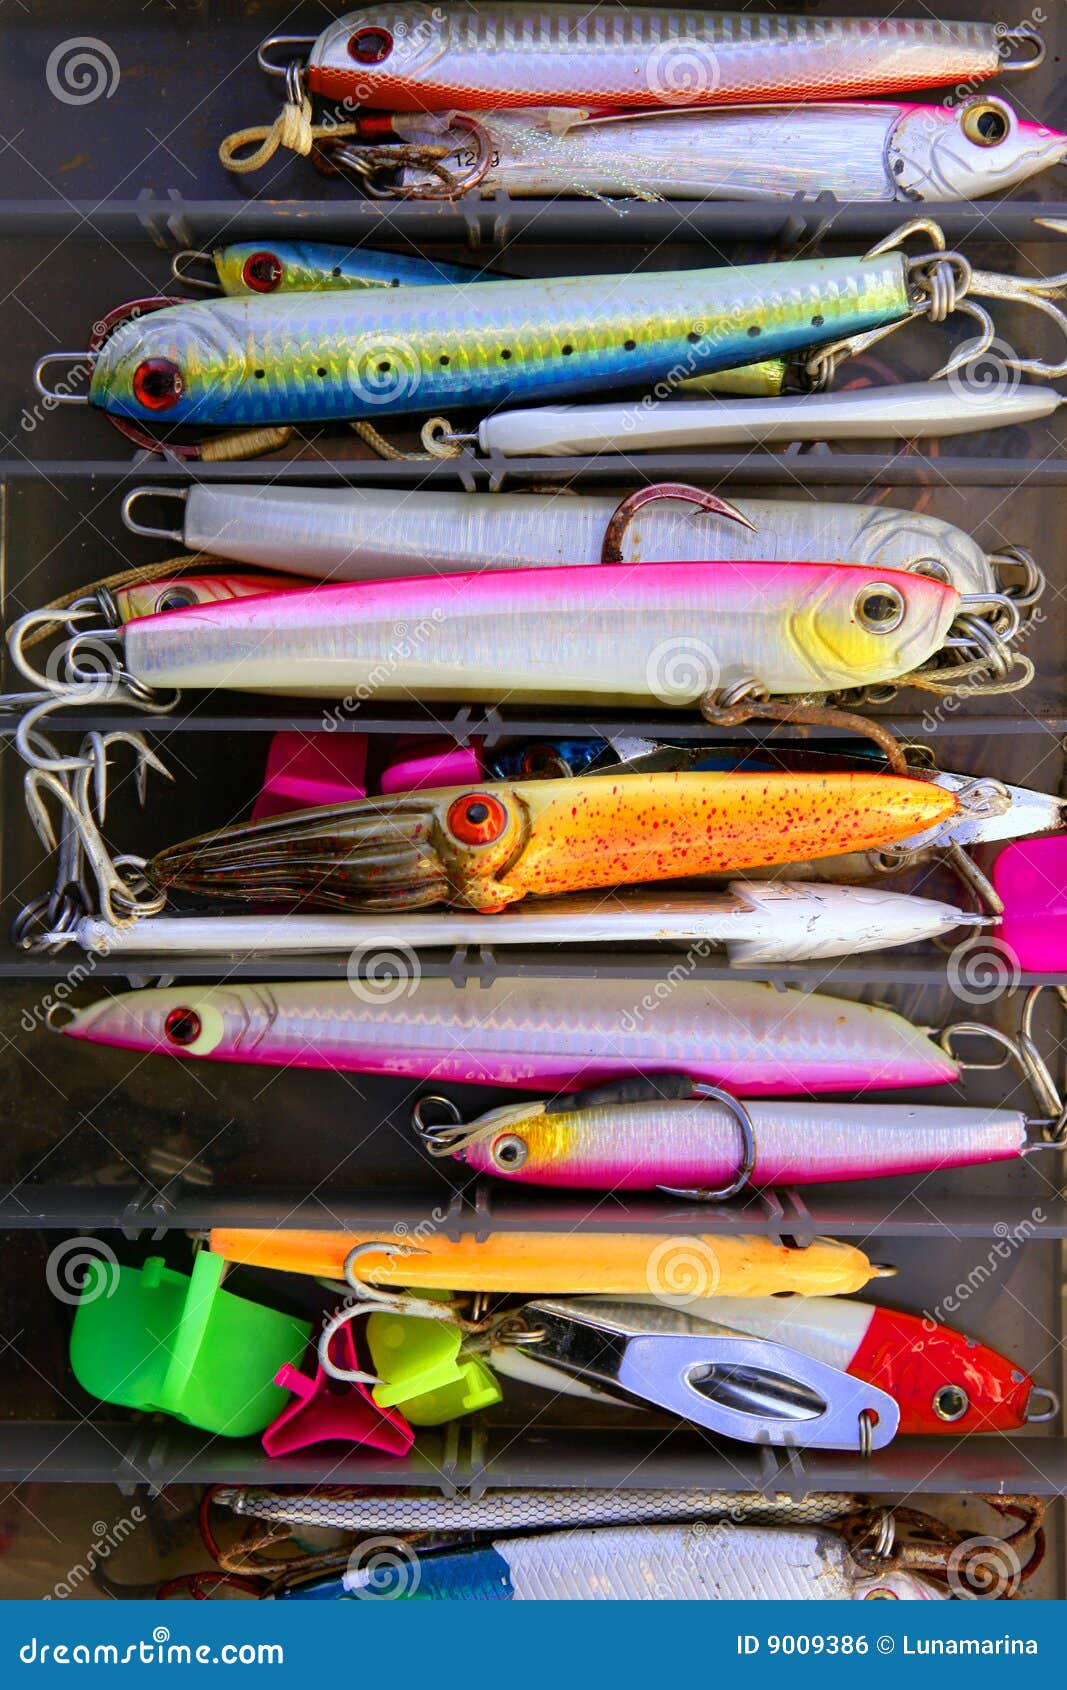 Colorful Fishing Saltwater Fish Lures Box Royalty Free Stock Image ...